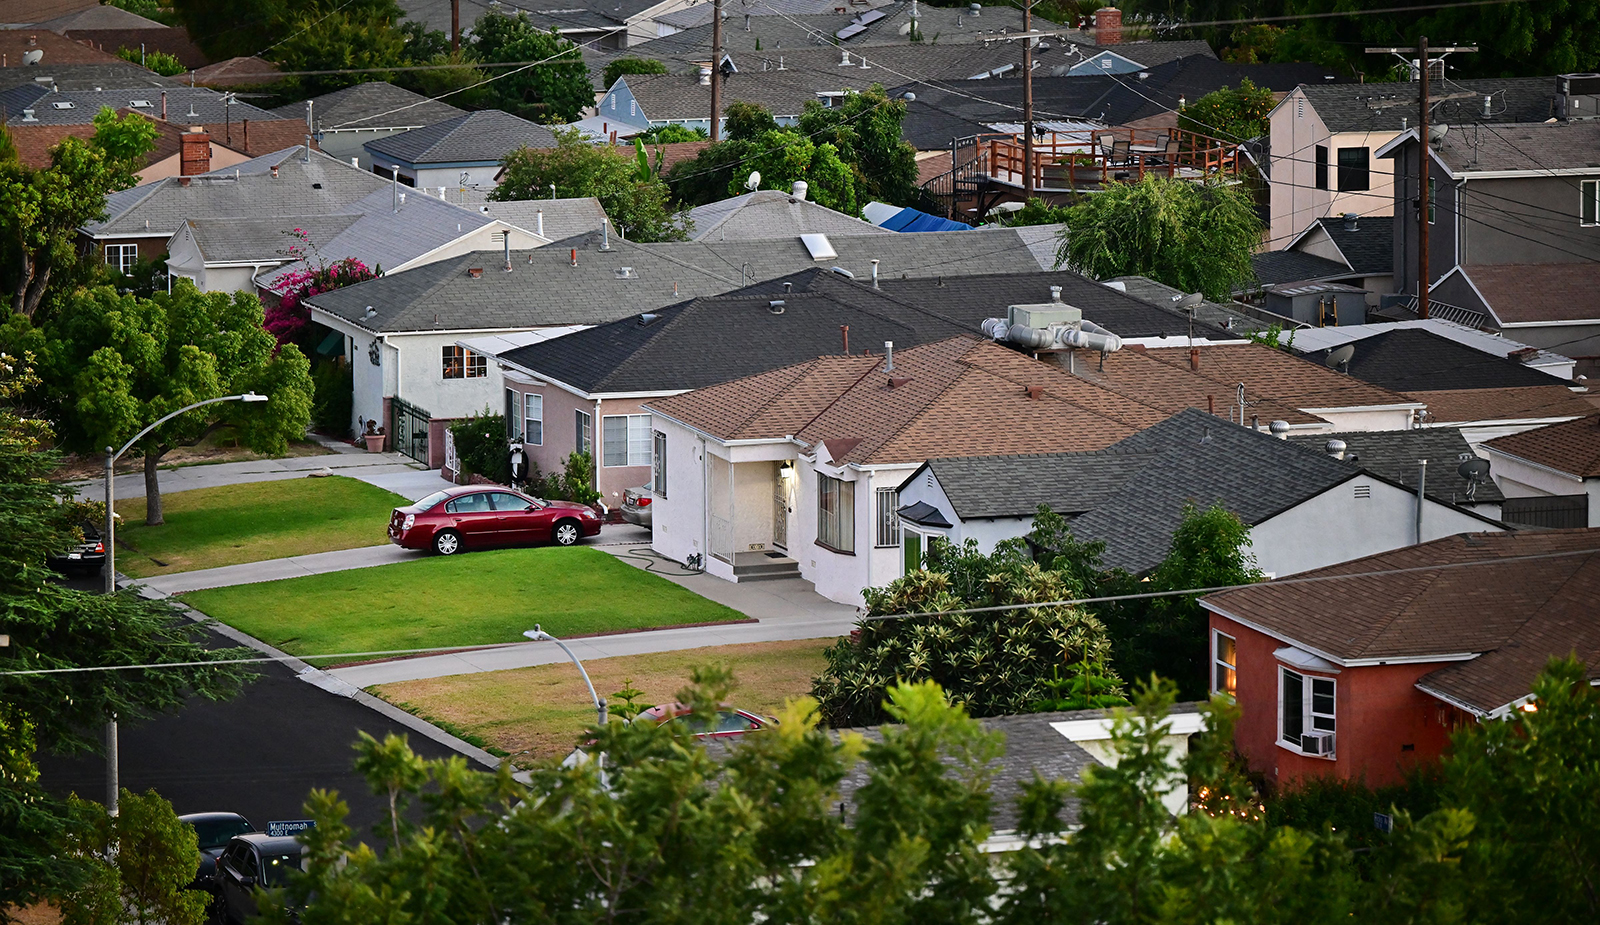 Homes in a Los Angeles, California neighborhood on July 5.